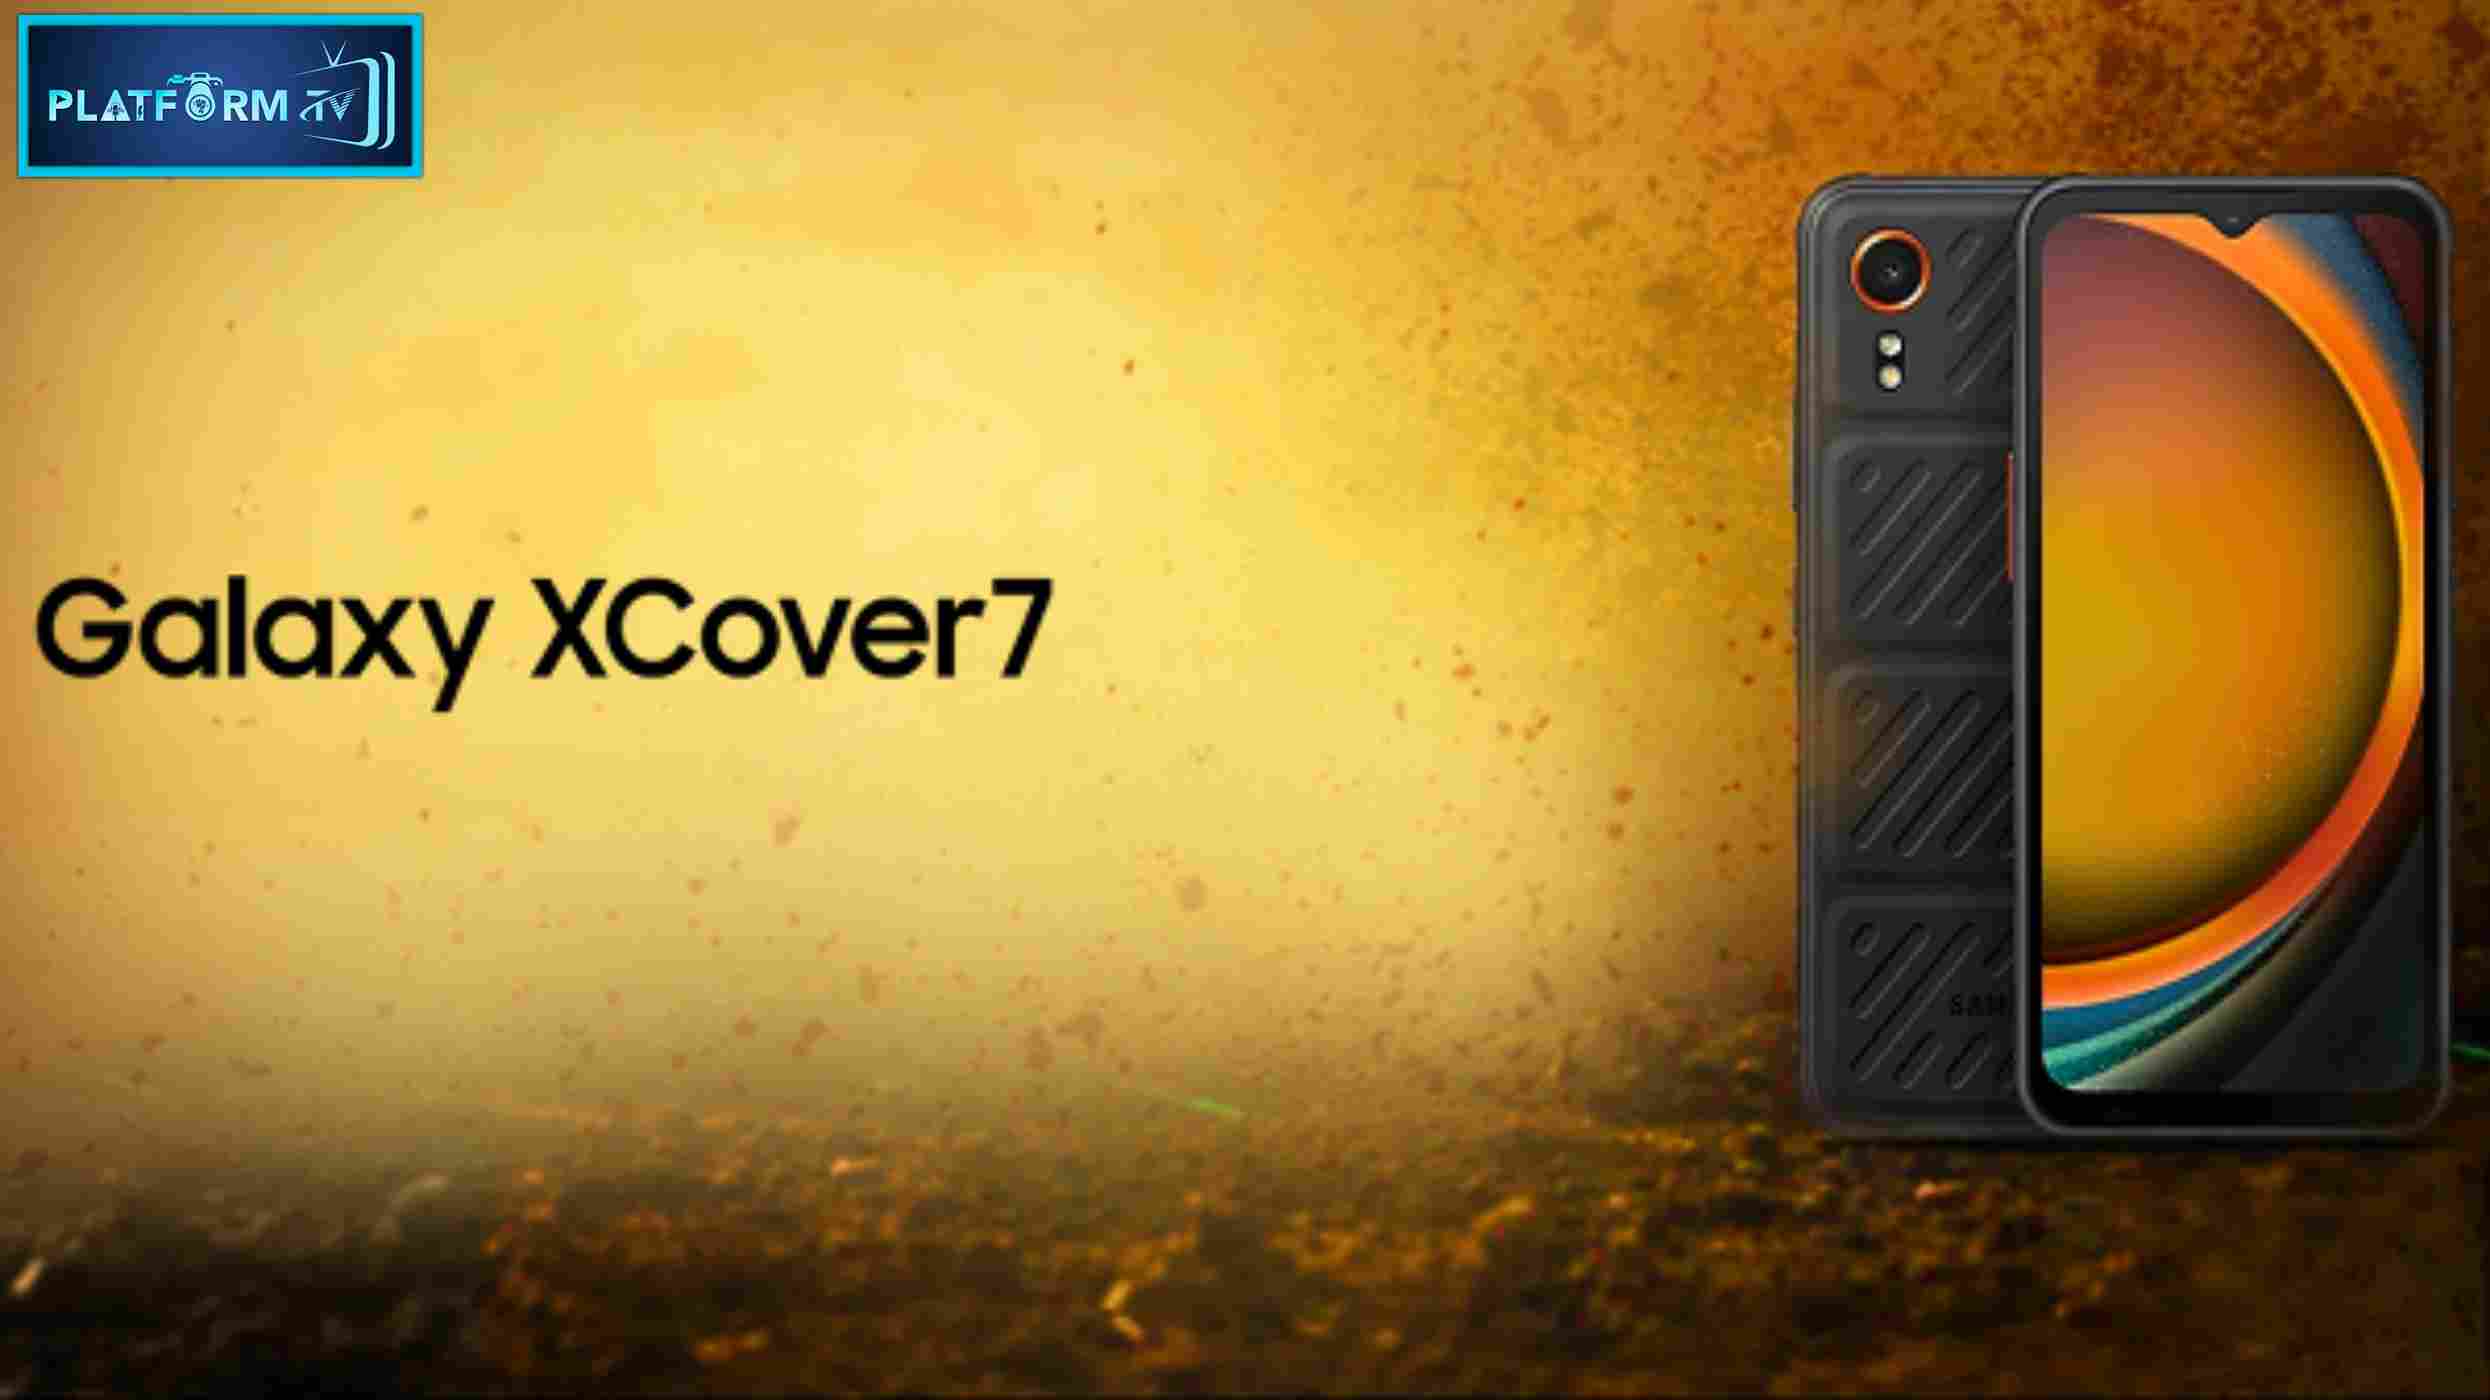 Samsung Galaxy XCover 7 - Platform Tamil